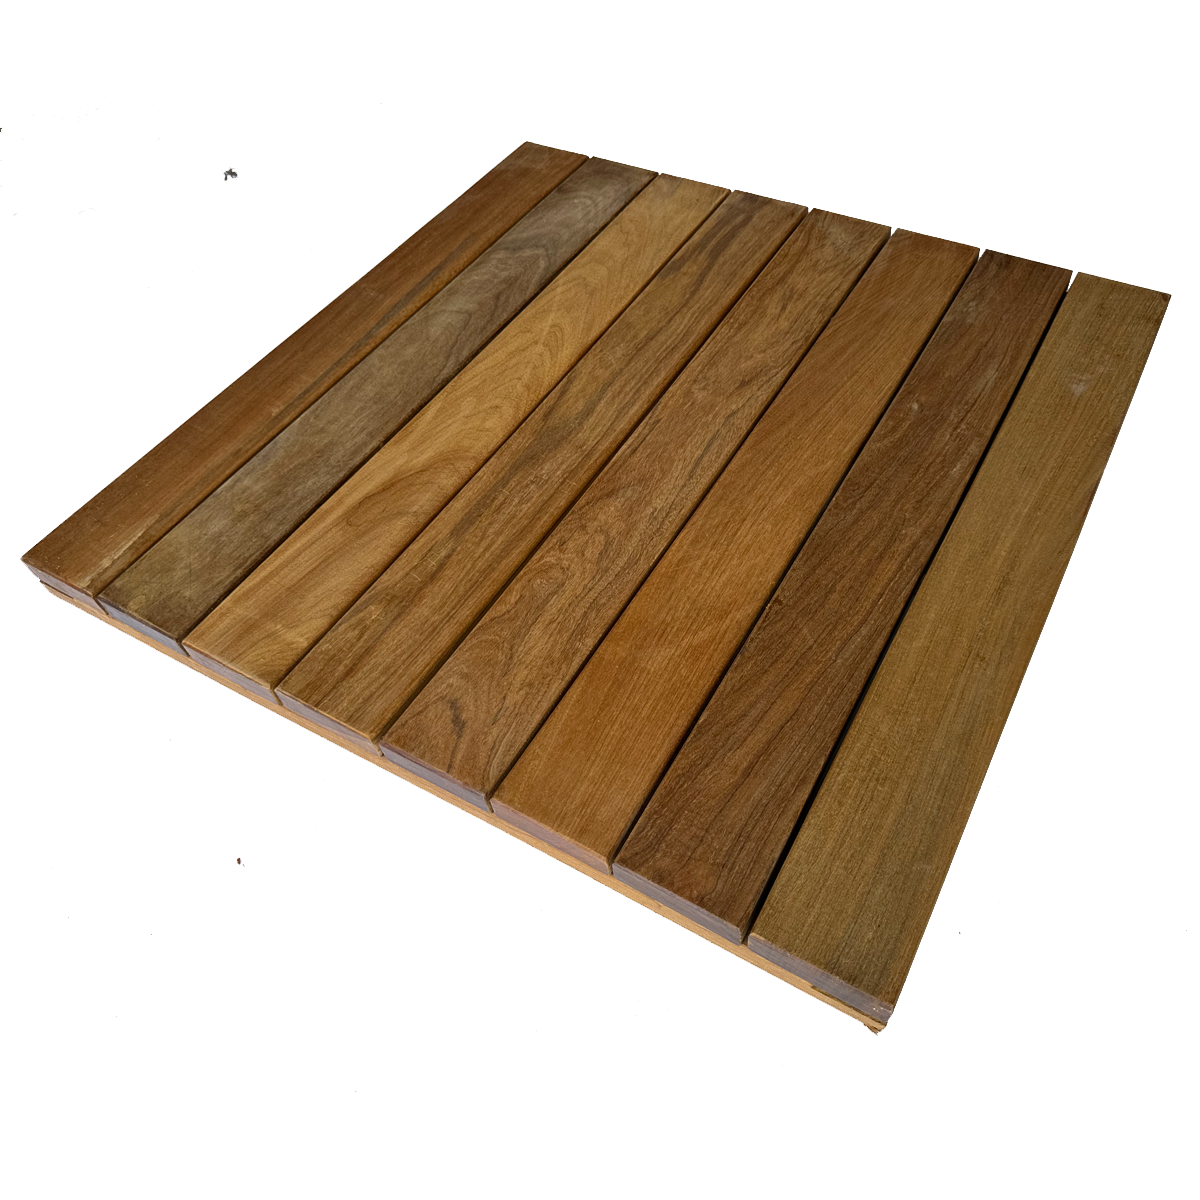 Cumaru Wood Tiles by Bison - DecksDirect